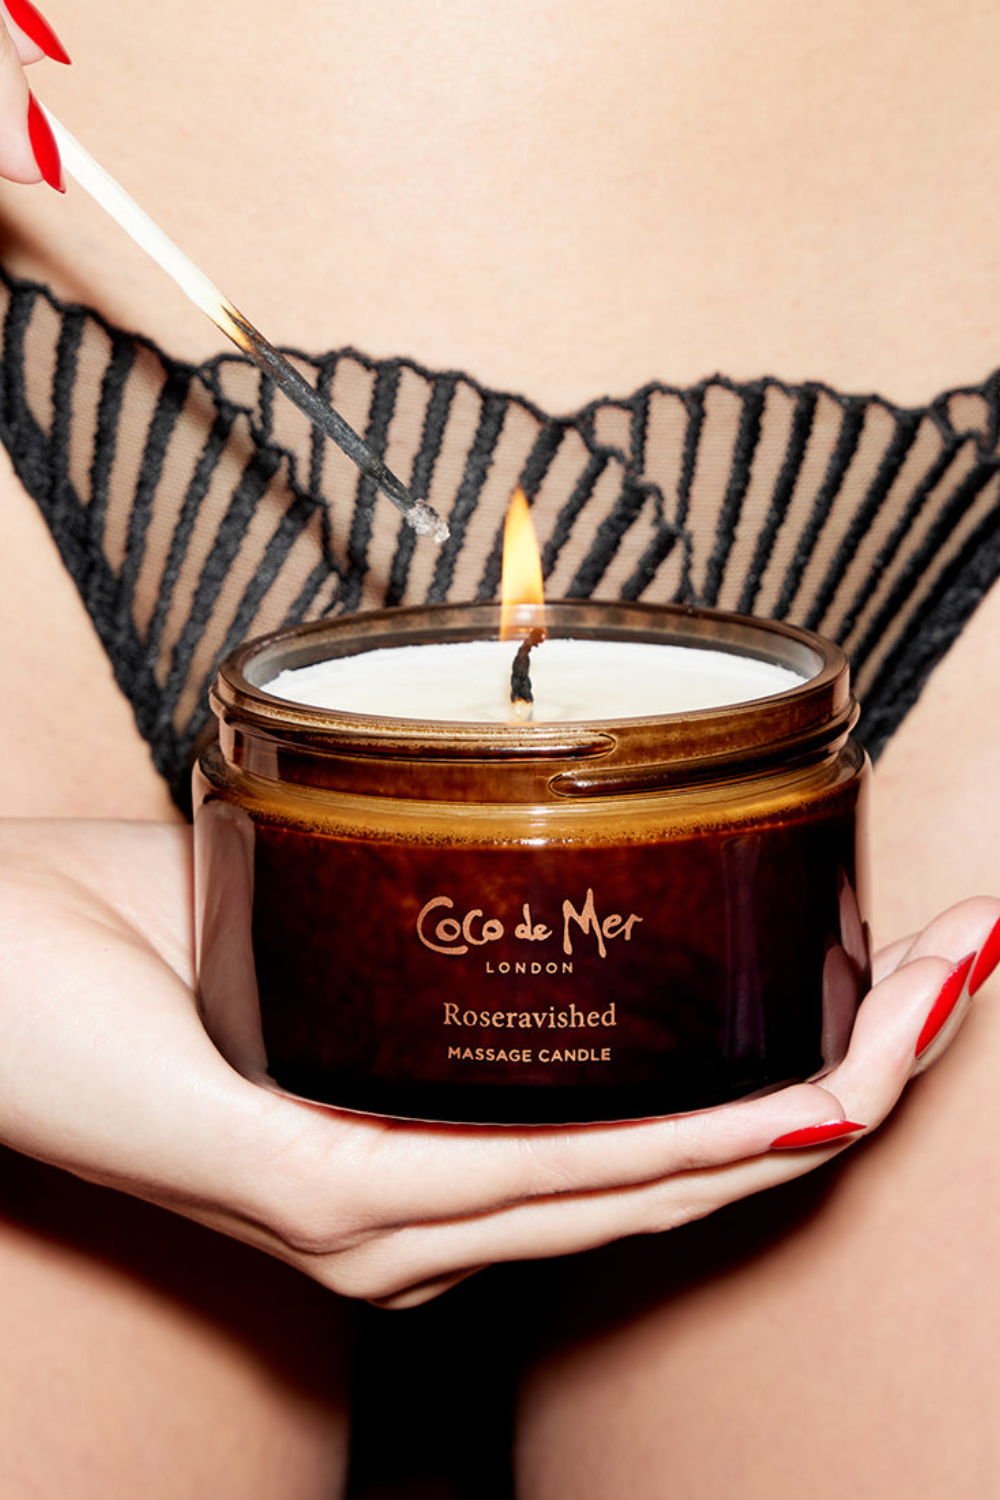 Coco de Mer Enraptured Figment Massage Candle